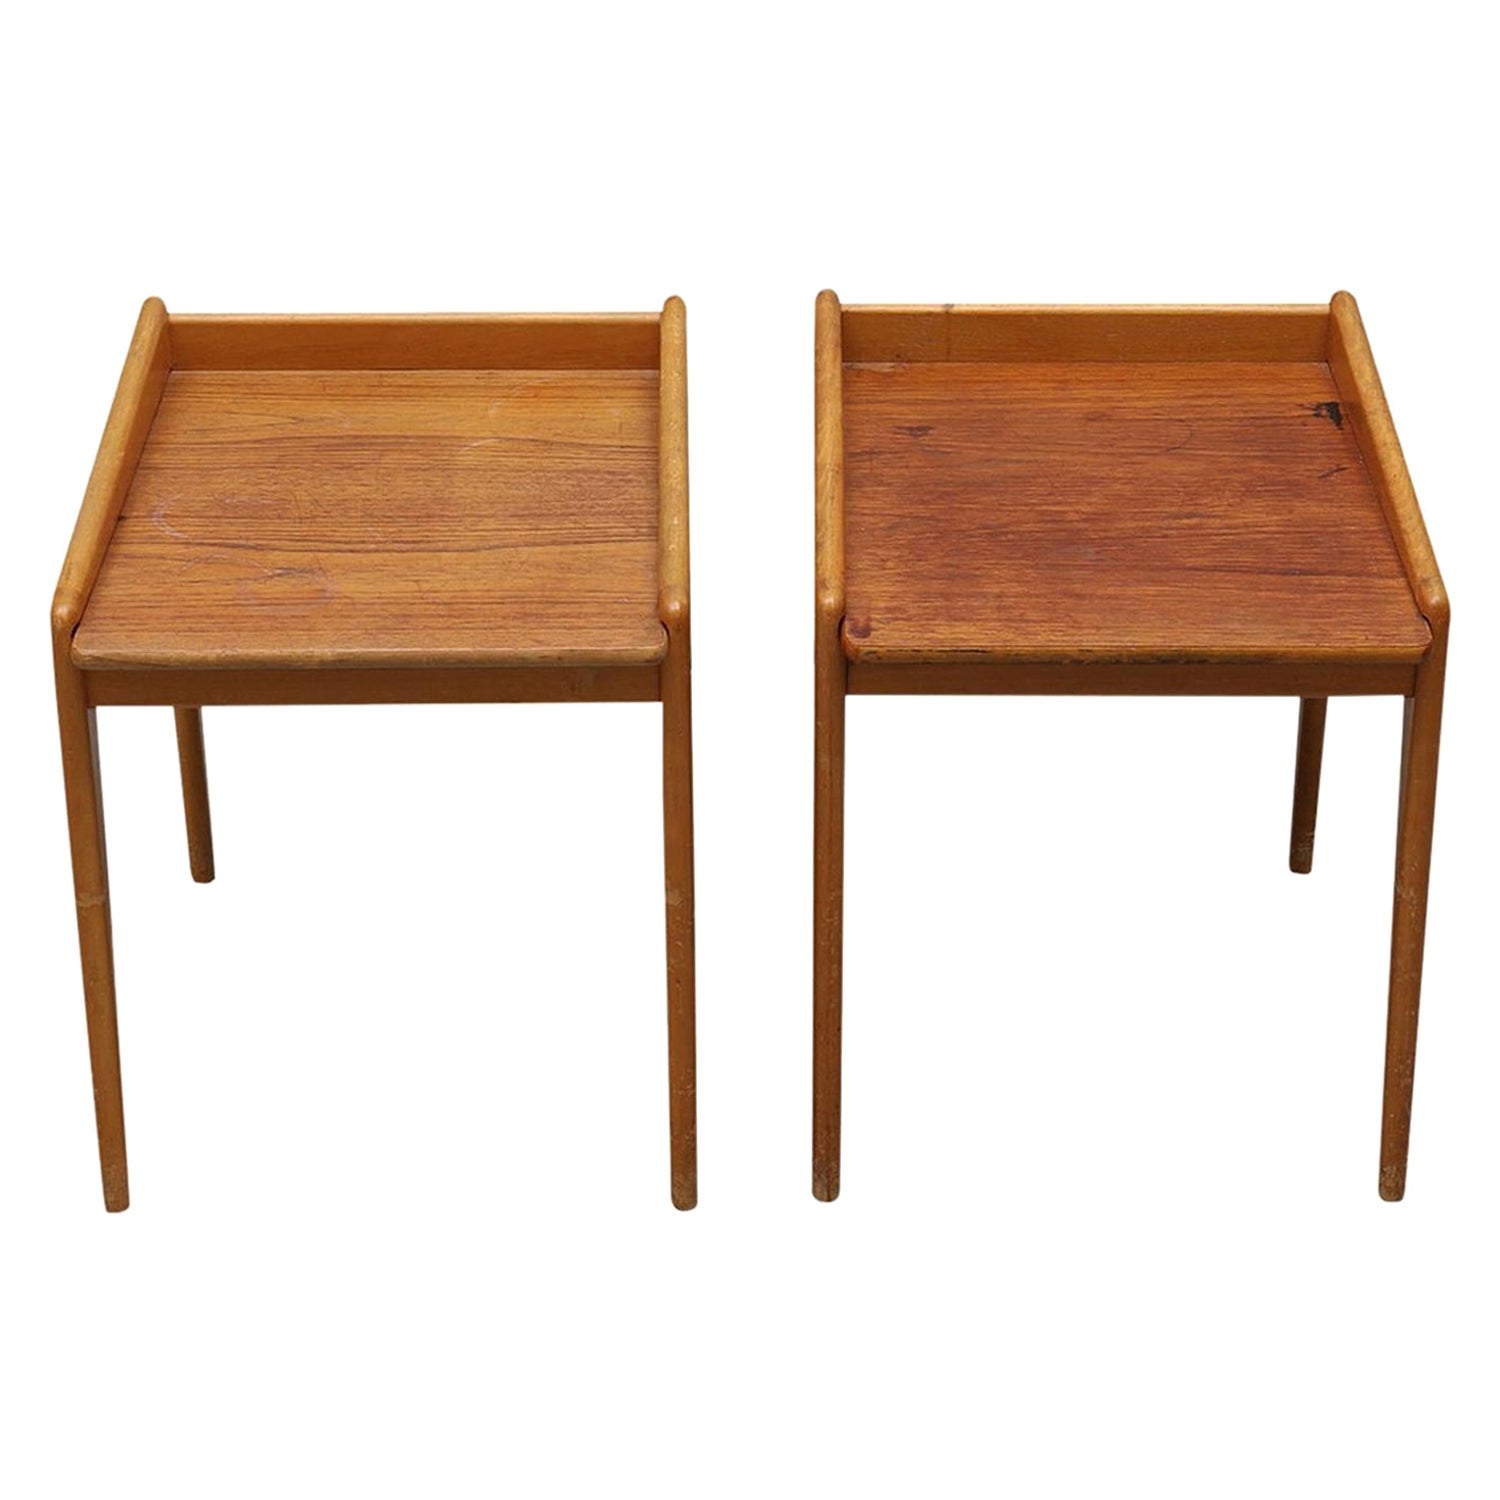 20th Century Danish Pair of Beechwood Bedside Tables - Vintage Oak Nightstands For Sale